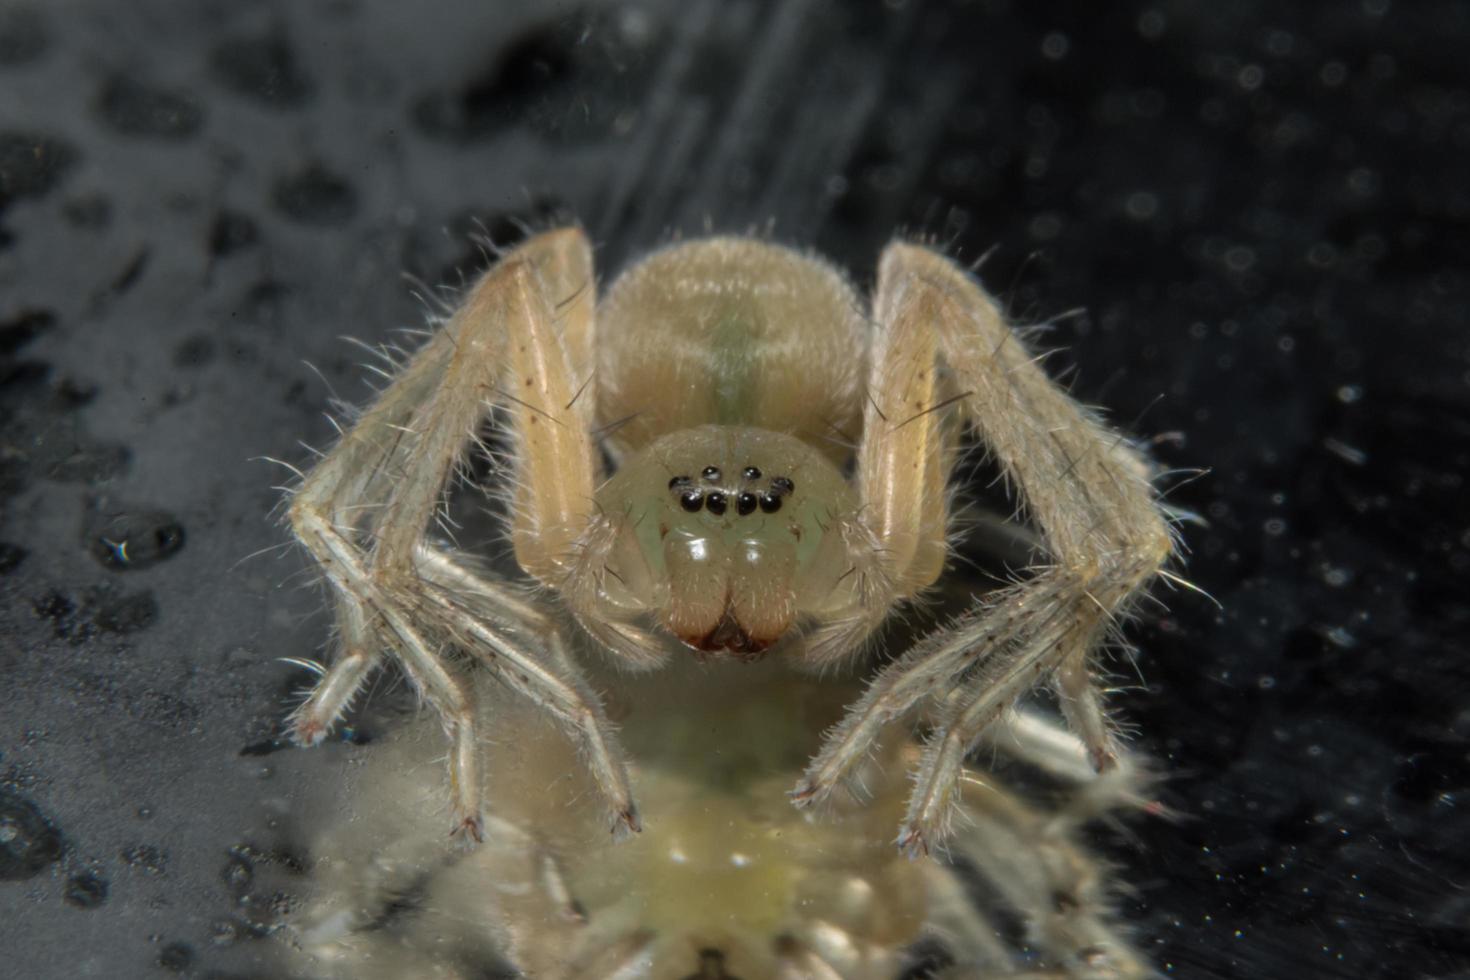 Spider, close-up photo